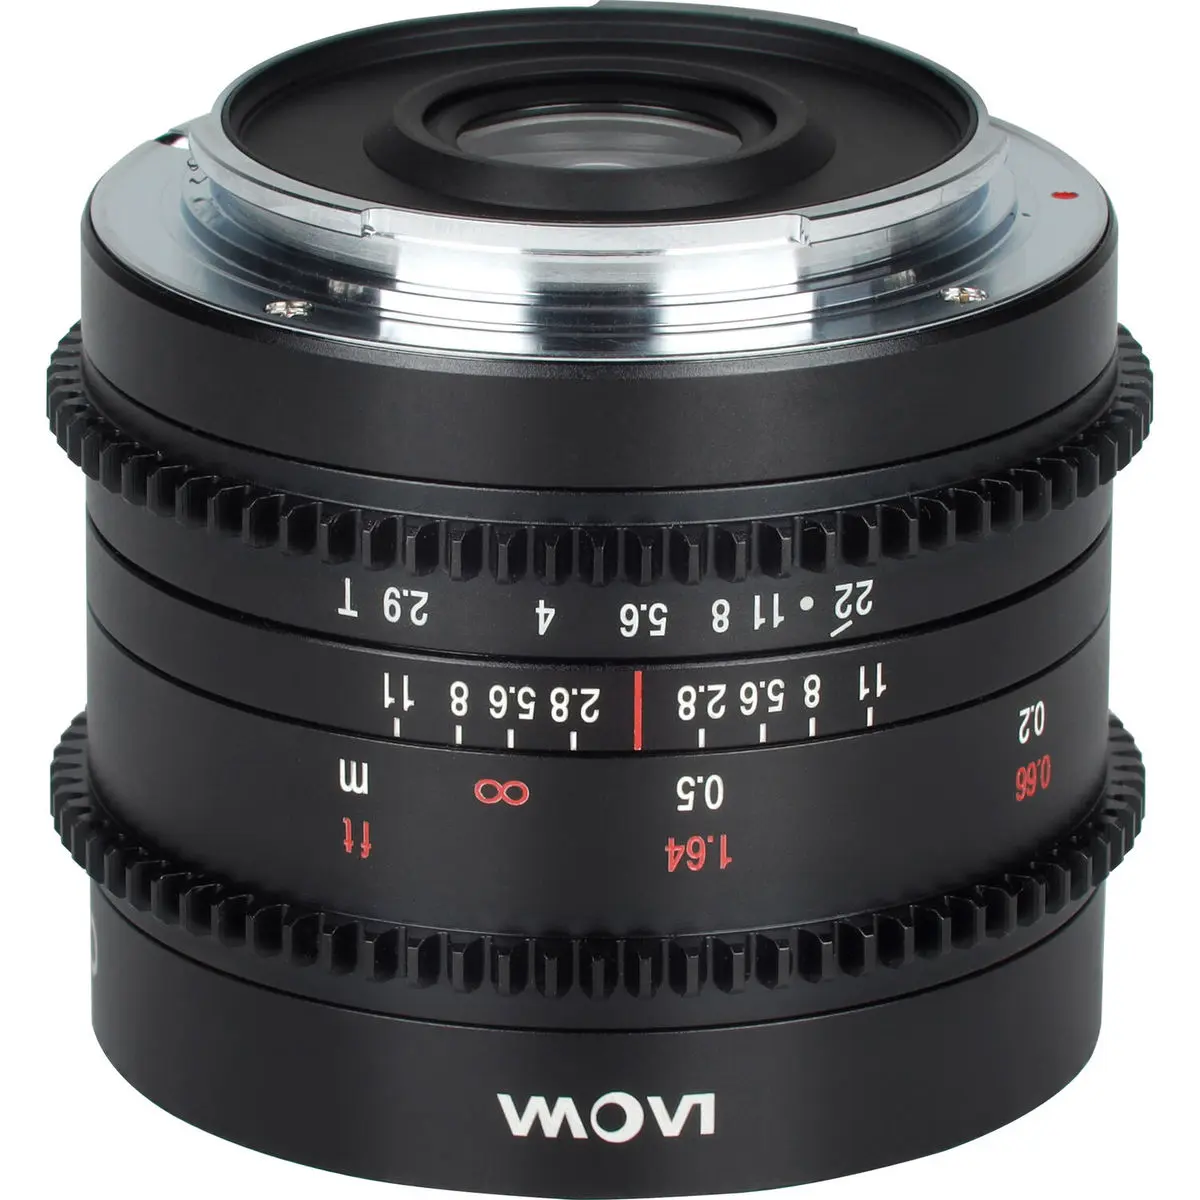 3. Laowa Lens 9mm T/2.9 Zero-D Cine (Fuji X)